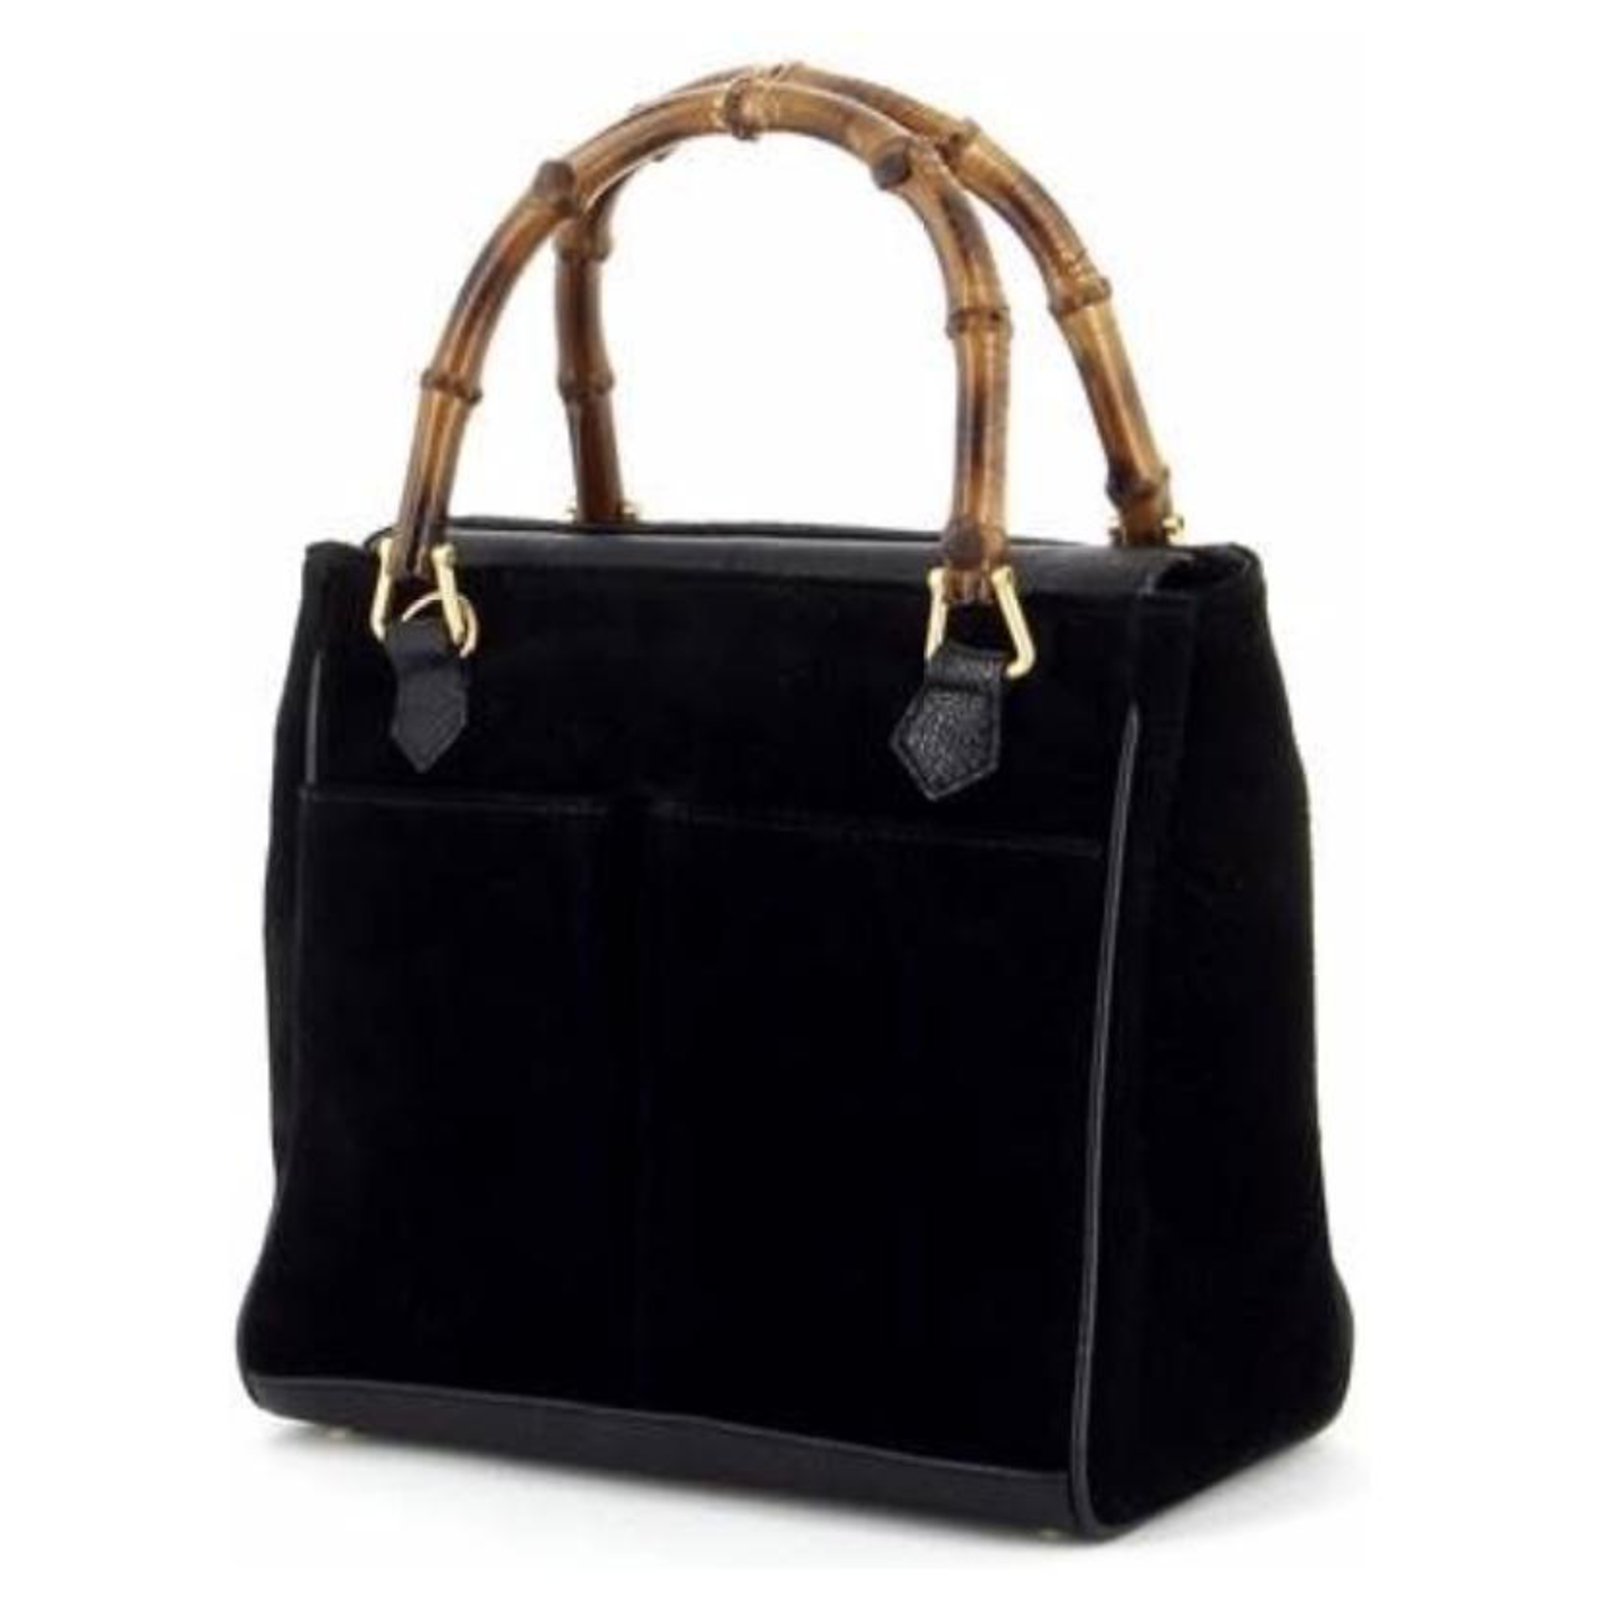 Gucci Gucci bamboo bag Handbags Leather 